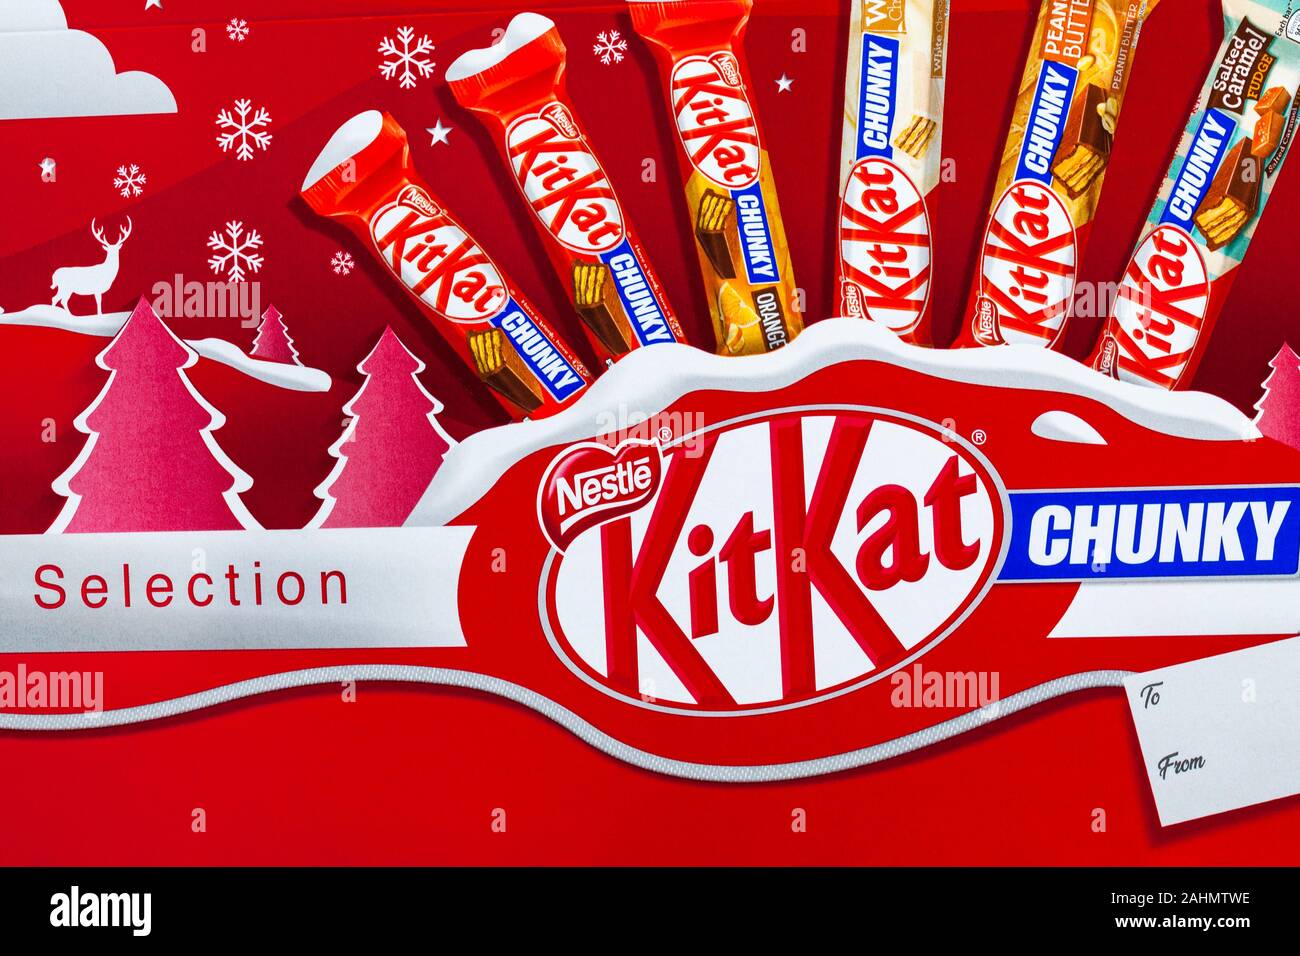 Caja de Nestlé KitKat selección chunky para Navidad - sabores - mantequilla  de cacahuete, naranja, blanco, sabor salado fudge de caramelo sabor sabores  Fotografía de stock - Alamy